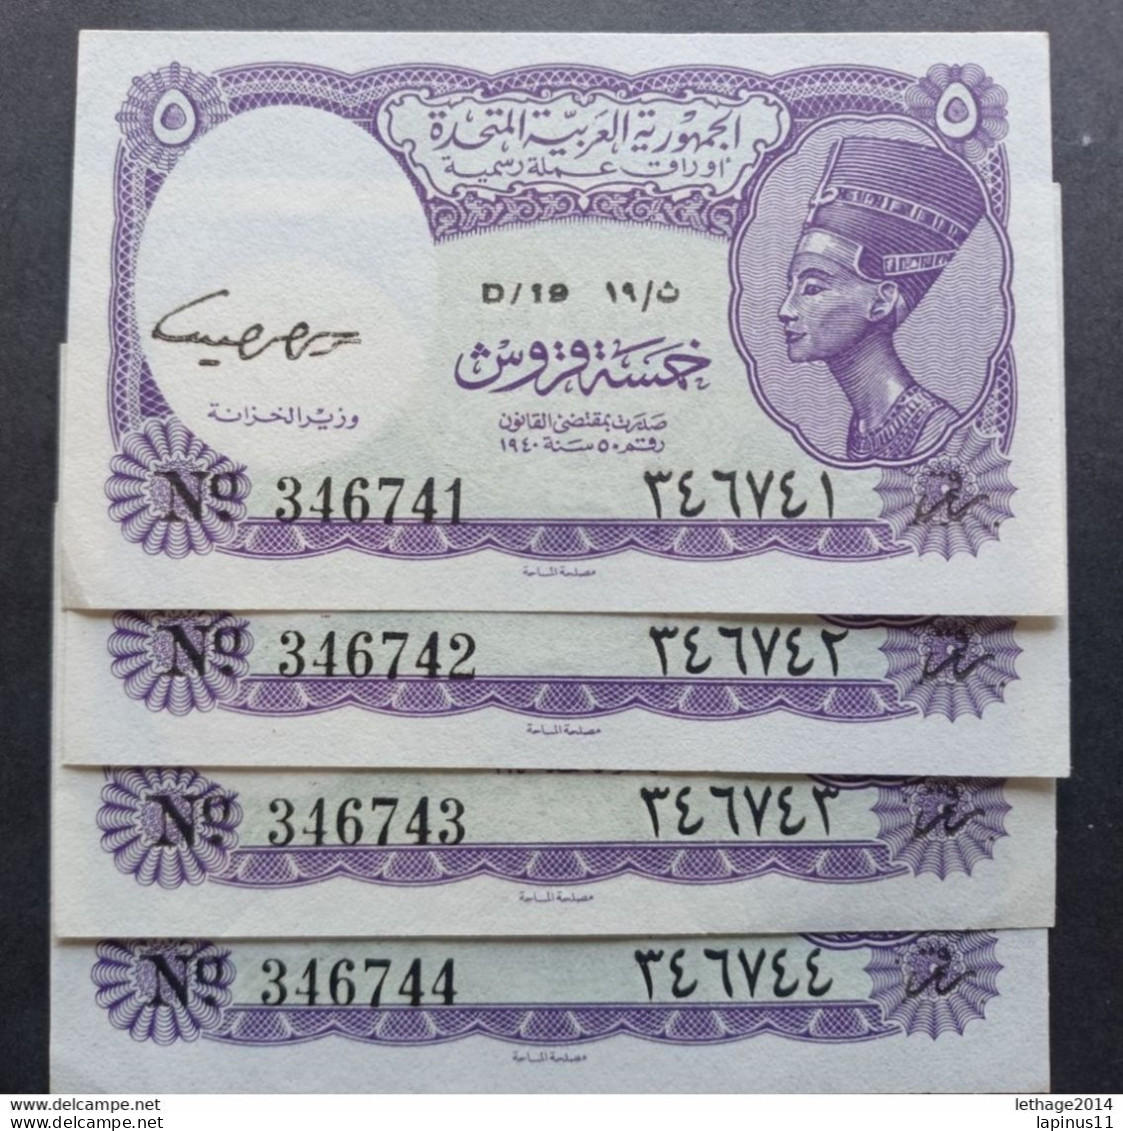 BANKNOTE EGITTO 5 P 1940 UNCIRCULATED SEQUENTIAL NUMBERS PARTIAL SIGNATURE DECAL 4 ERROR NUMBER 4 SERIAL BROKEN - Egitto